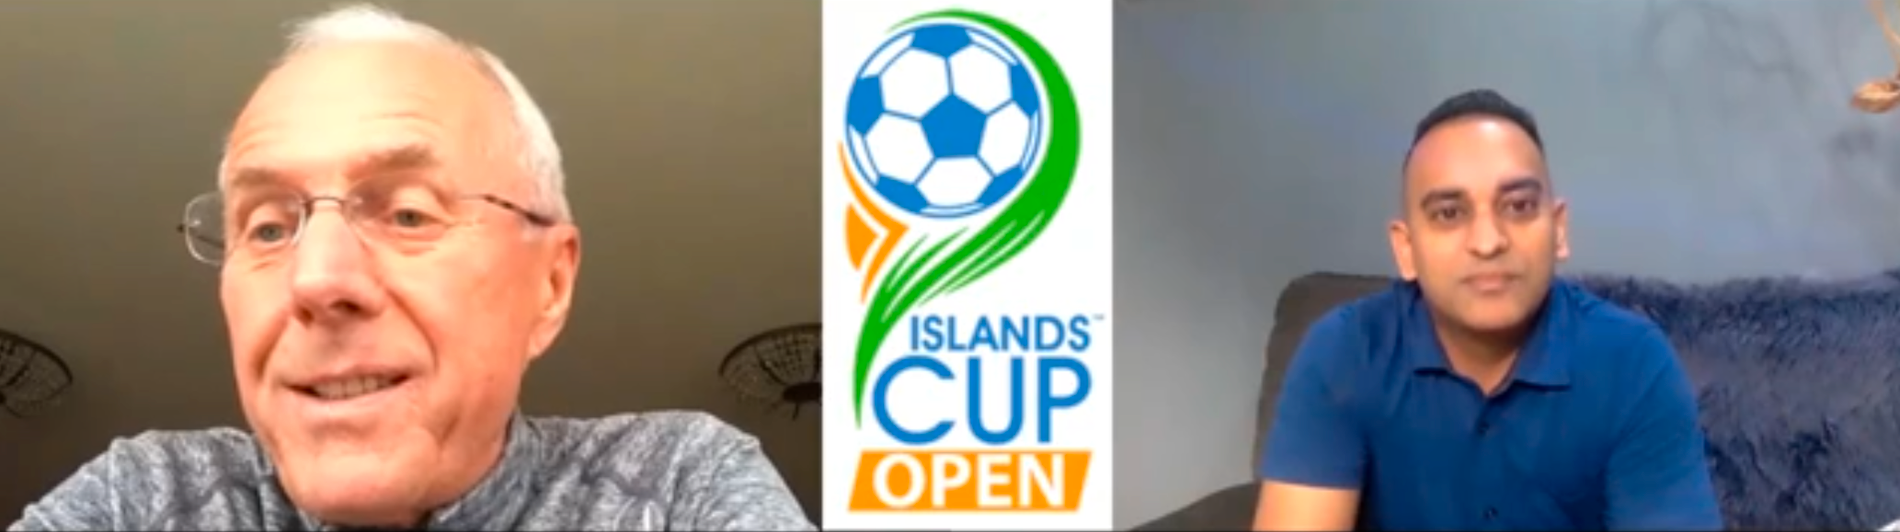 Svennis pratar om uppdraget på Islands Cup Opens hemsida.